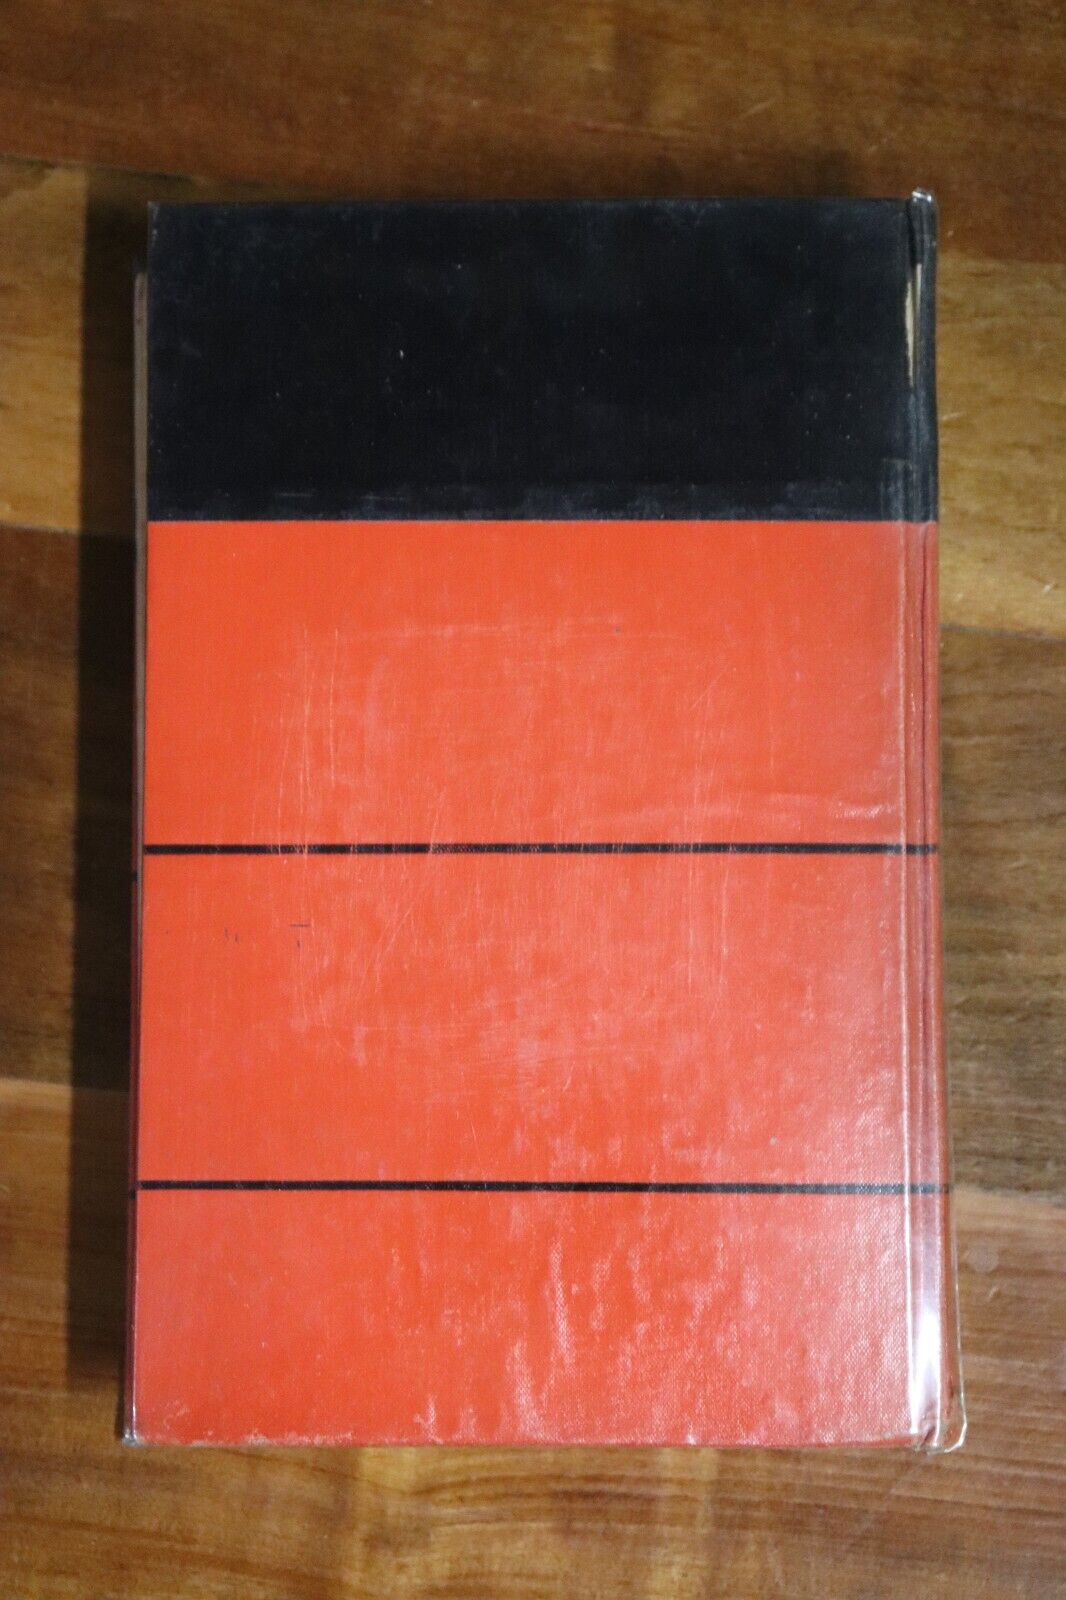 Mauretania by Humfrey Jordan - 1936 - 1st Edition Maritime History Book